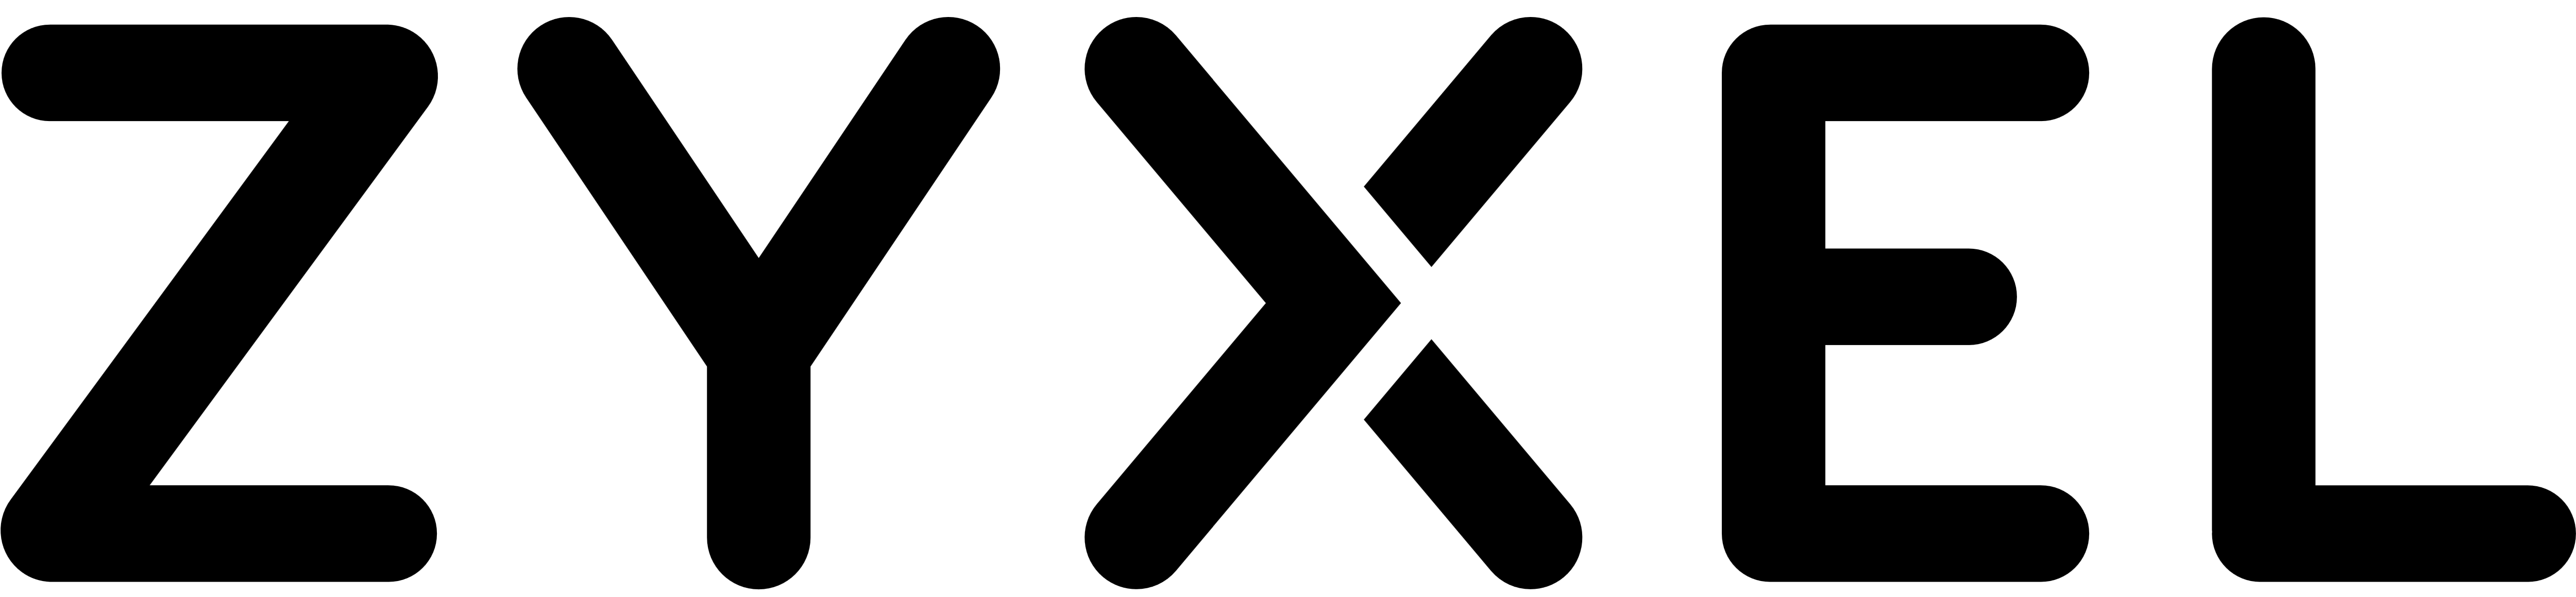 ZyXEL Logo - Zyxel – Logos Download